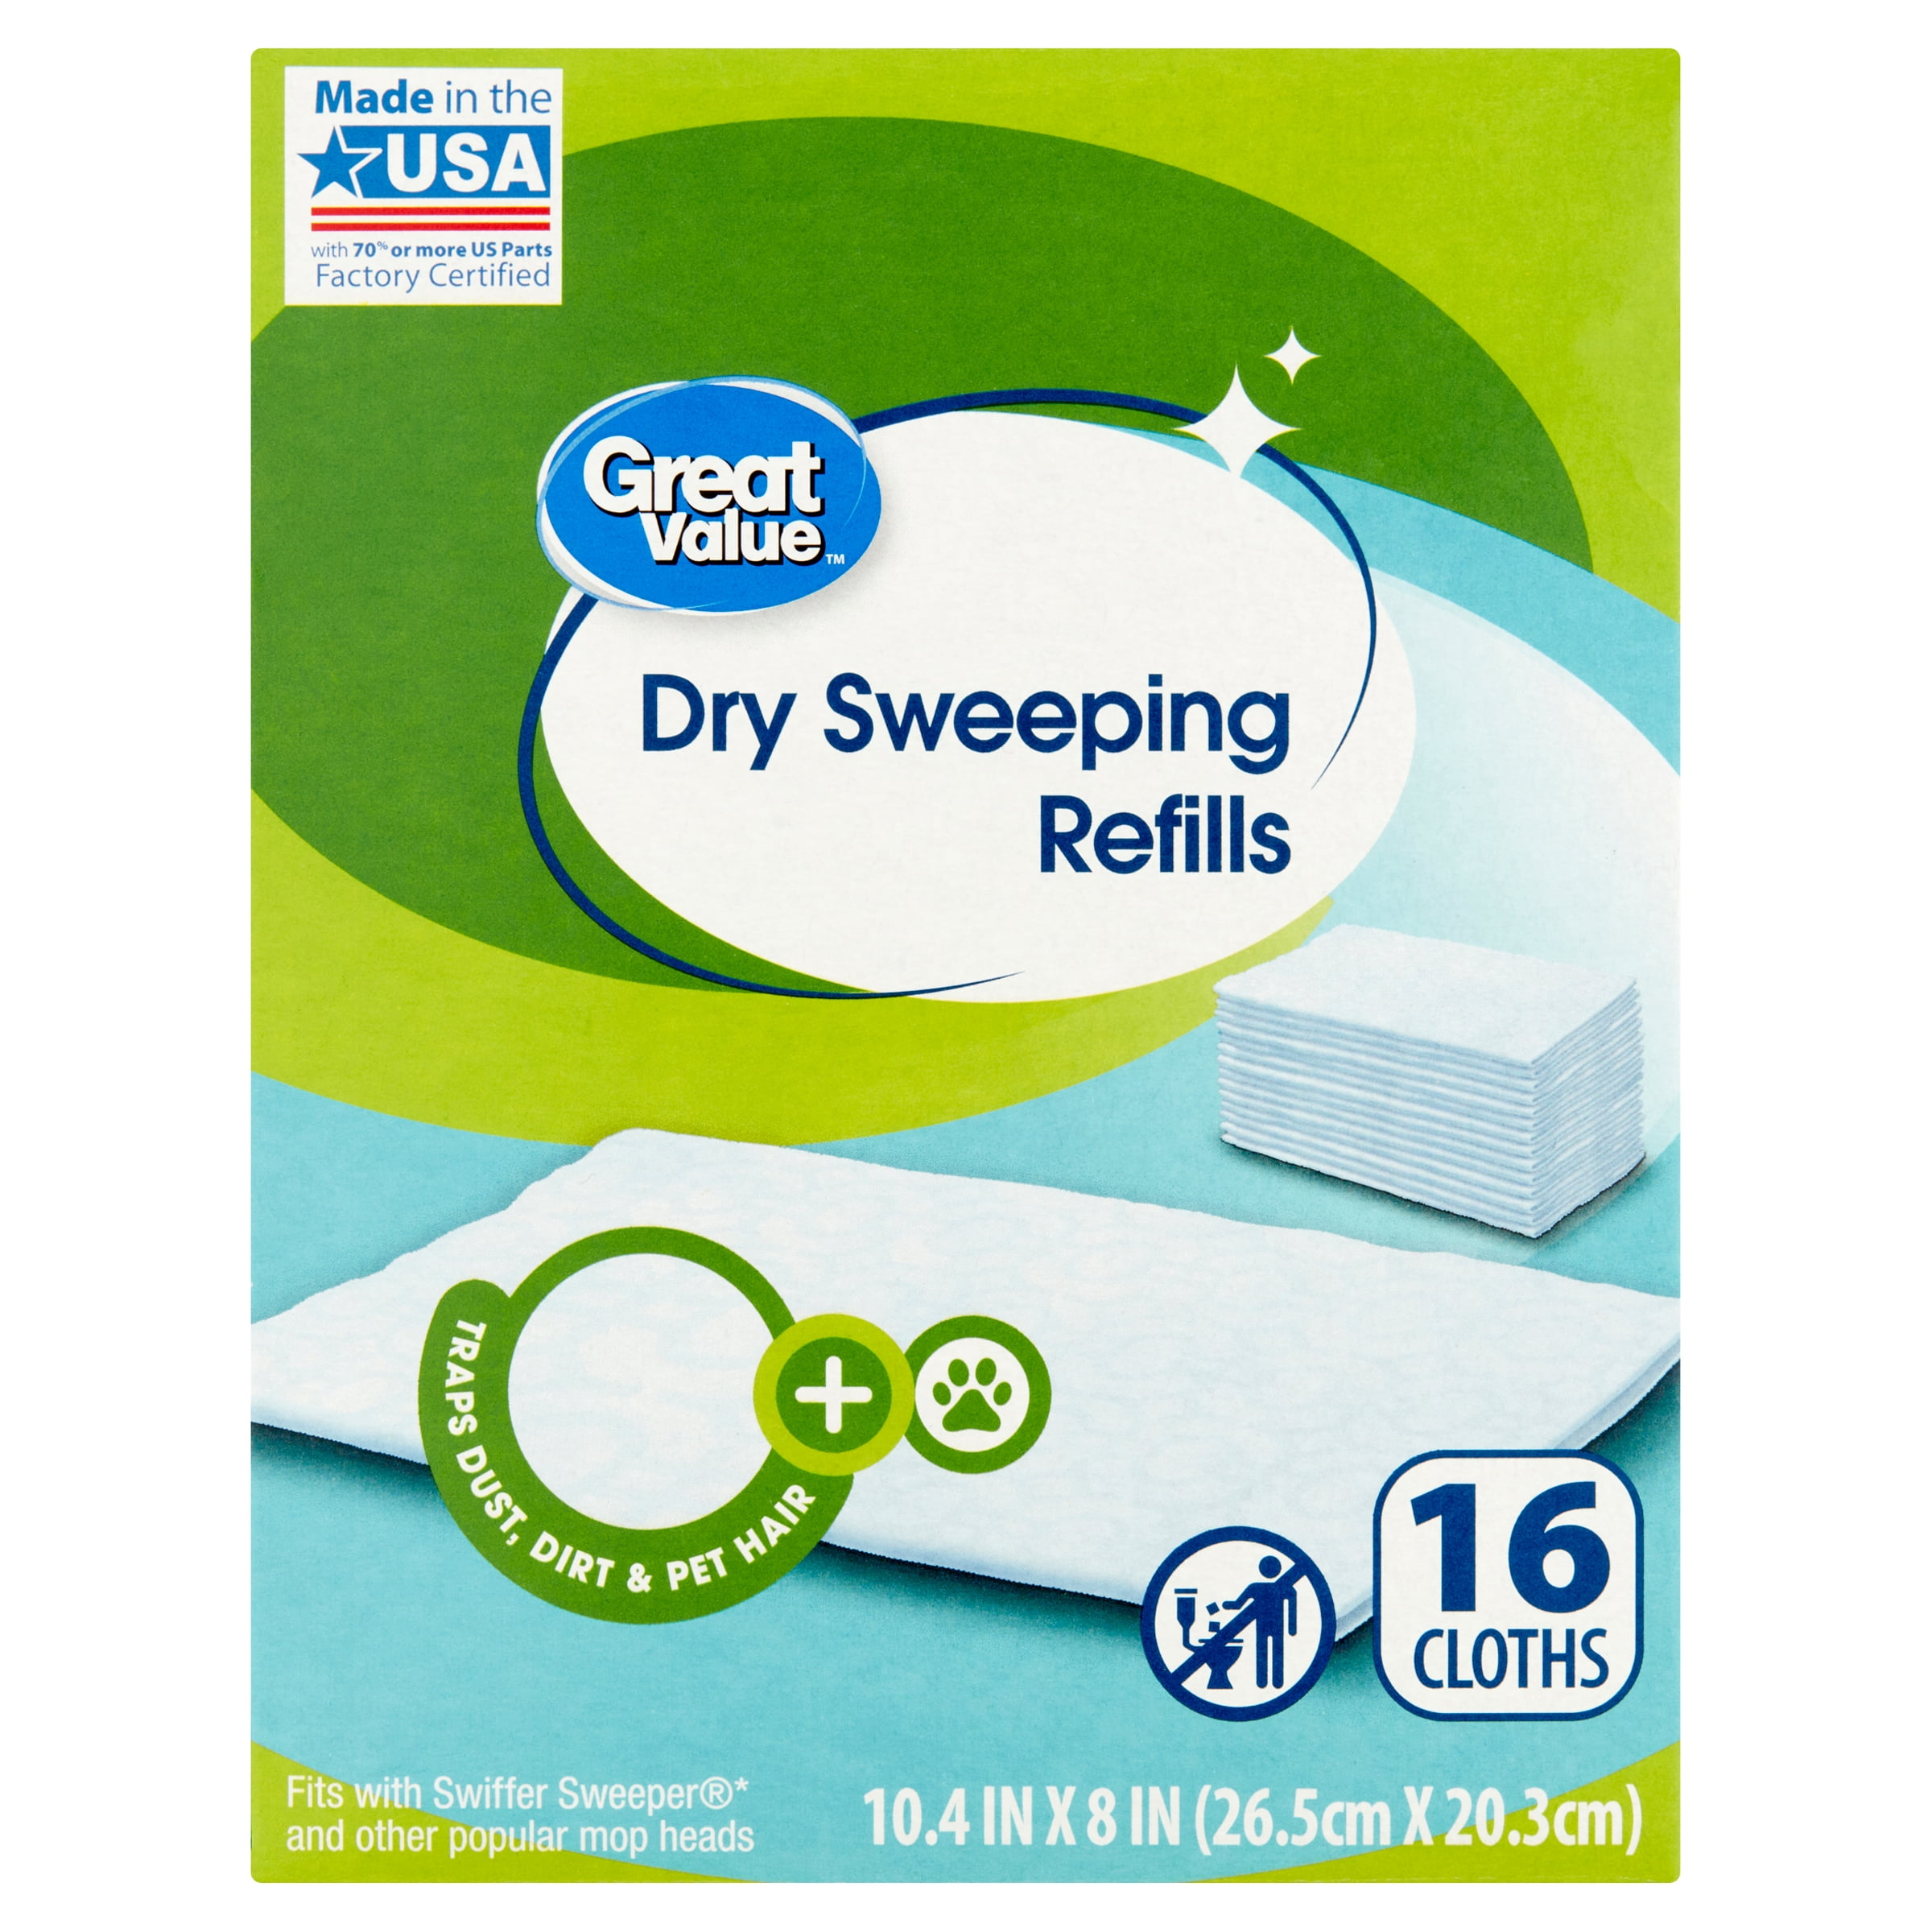 Sellars 90174 Clean Task Cleaning & Degreasing Wet Wipe Refill Pack 70 Sheet Count - 1 Refill Bag